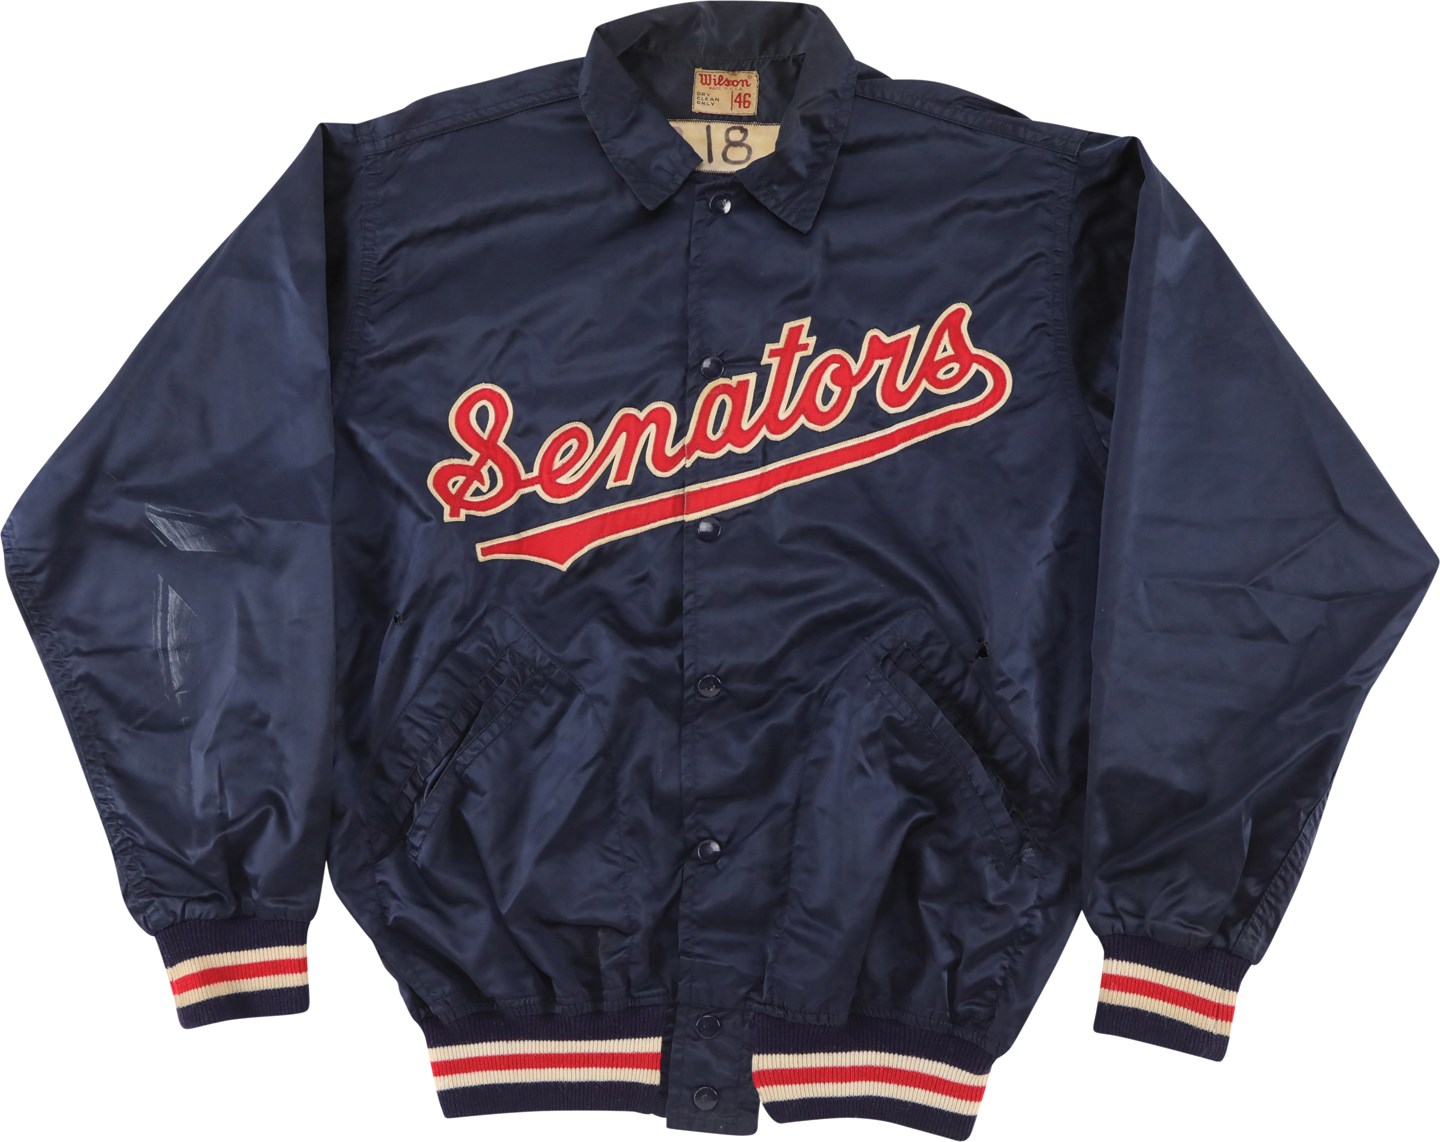 Baseball Equipment - Circa 1970 Washington Senators Game Worn Dugout Jacket